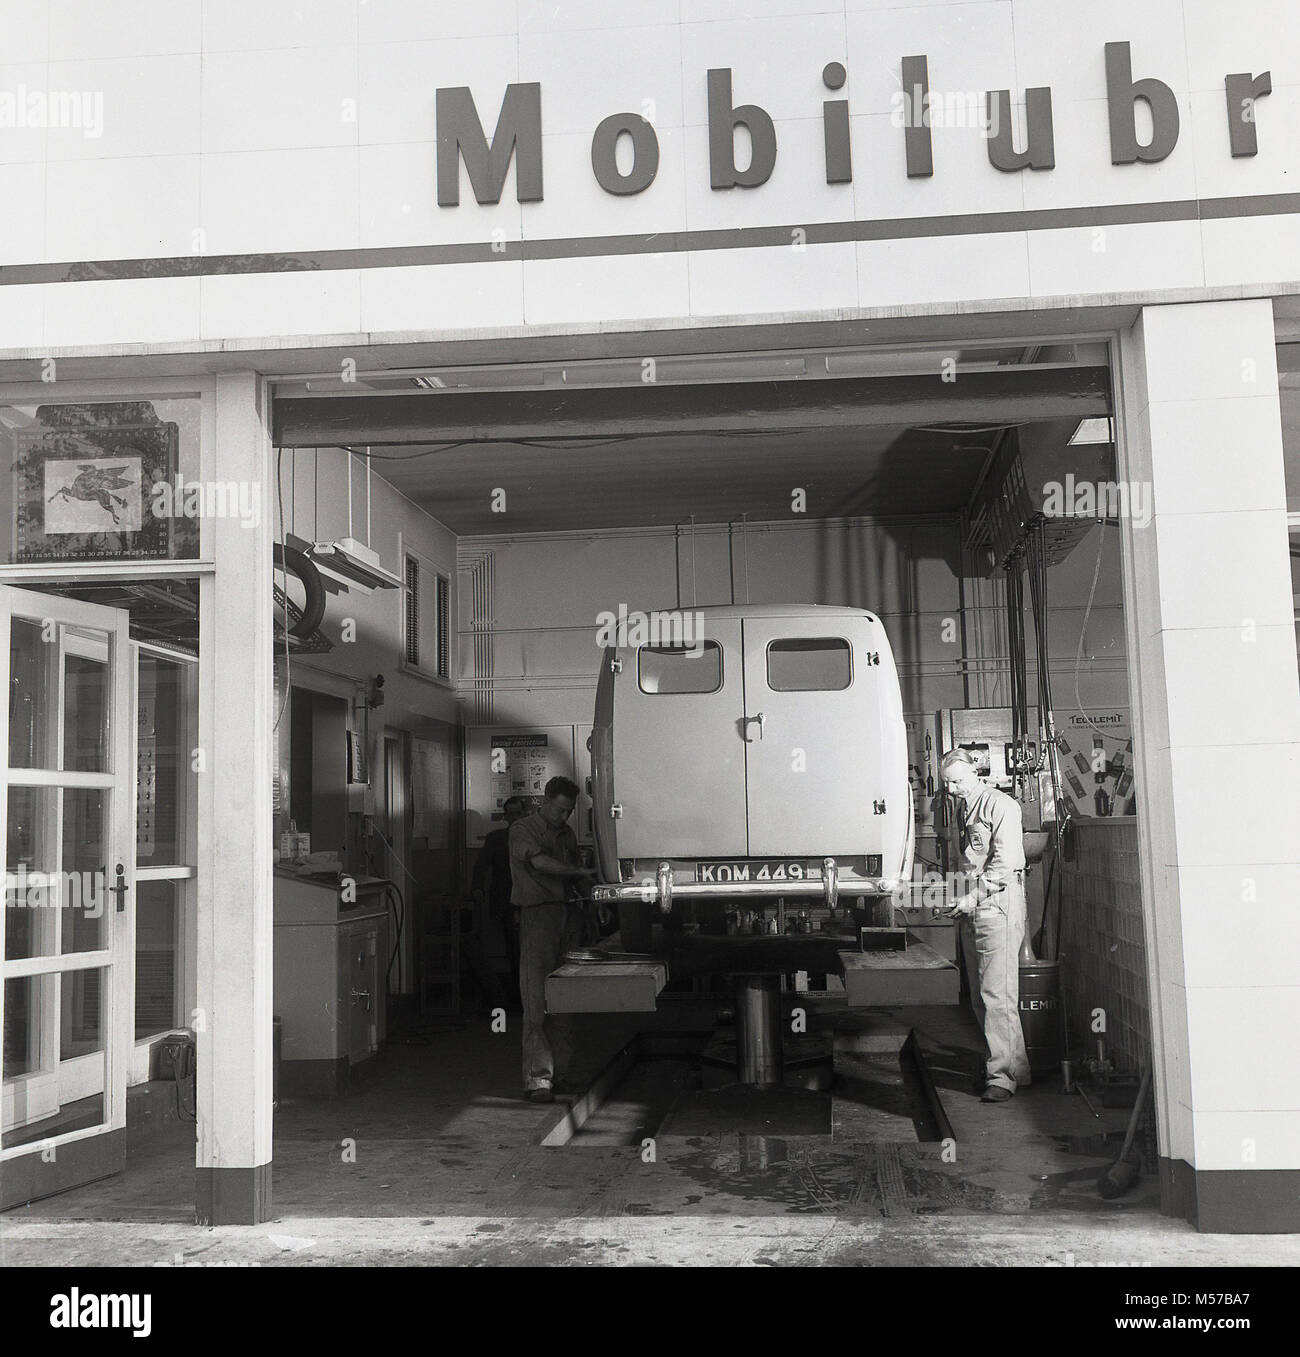 1950, historische, Mobil motor Mechanik Wartung einer Van innerhalb einer Mobilgas Garage Werkstatt, England, UK. Stockfoto